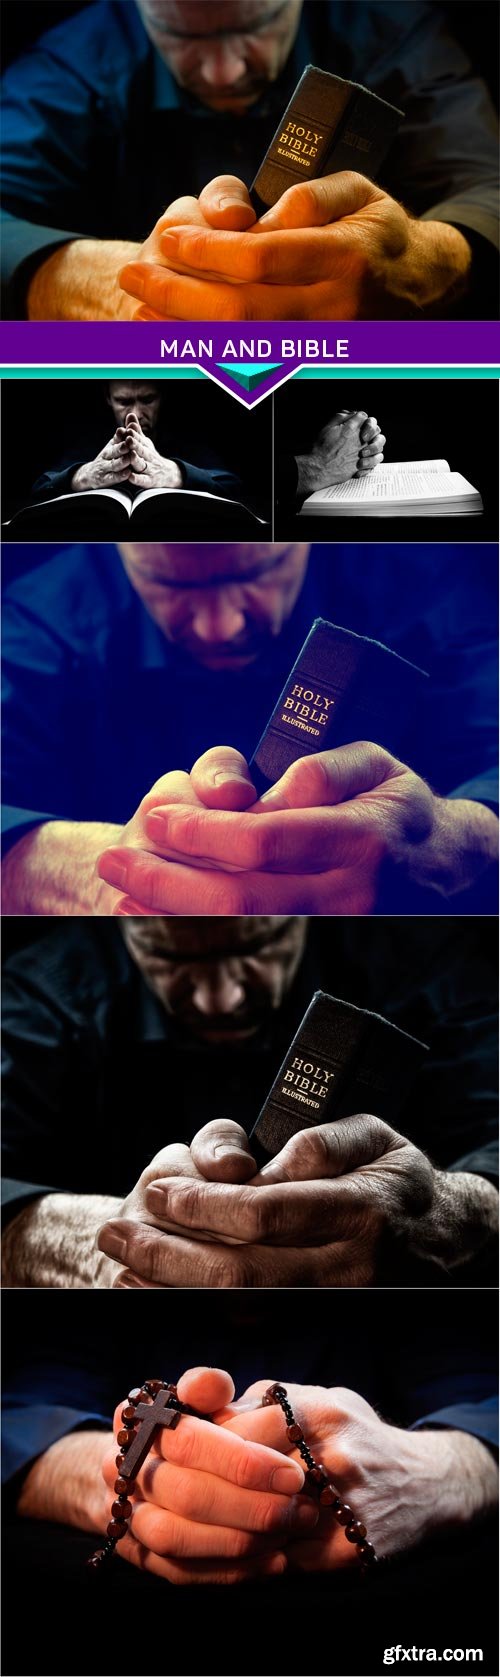 Man and Bible 6x JPEG